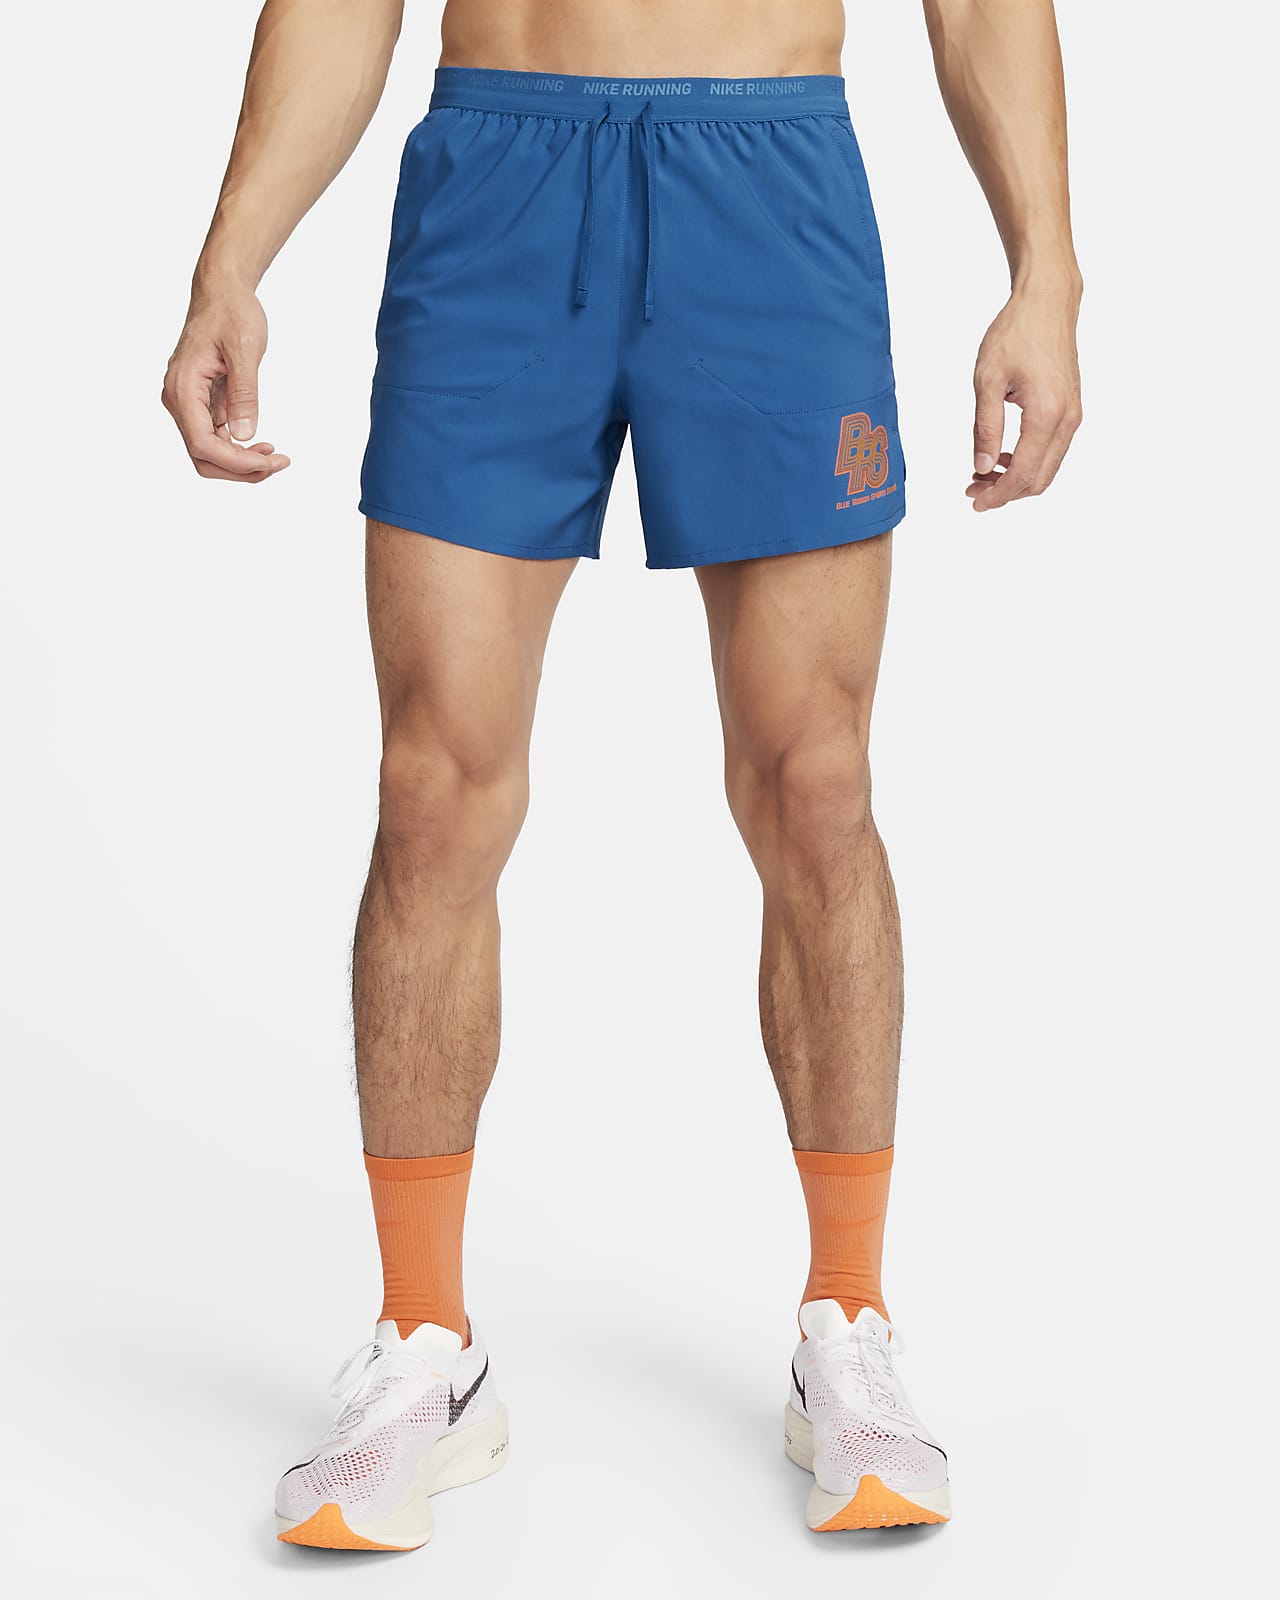 Nike Running Energy Stride Pantalons curts amb eslip integrat de running de 13 cm - Home